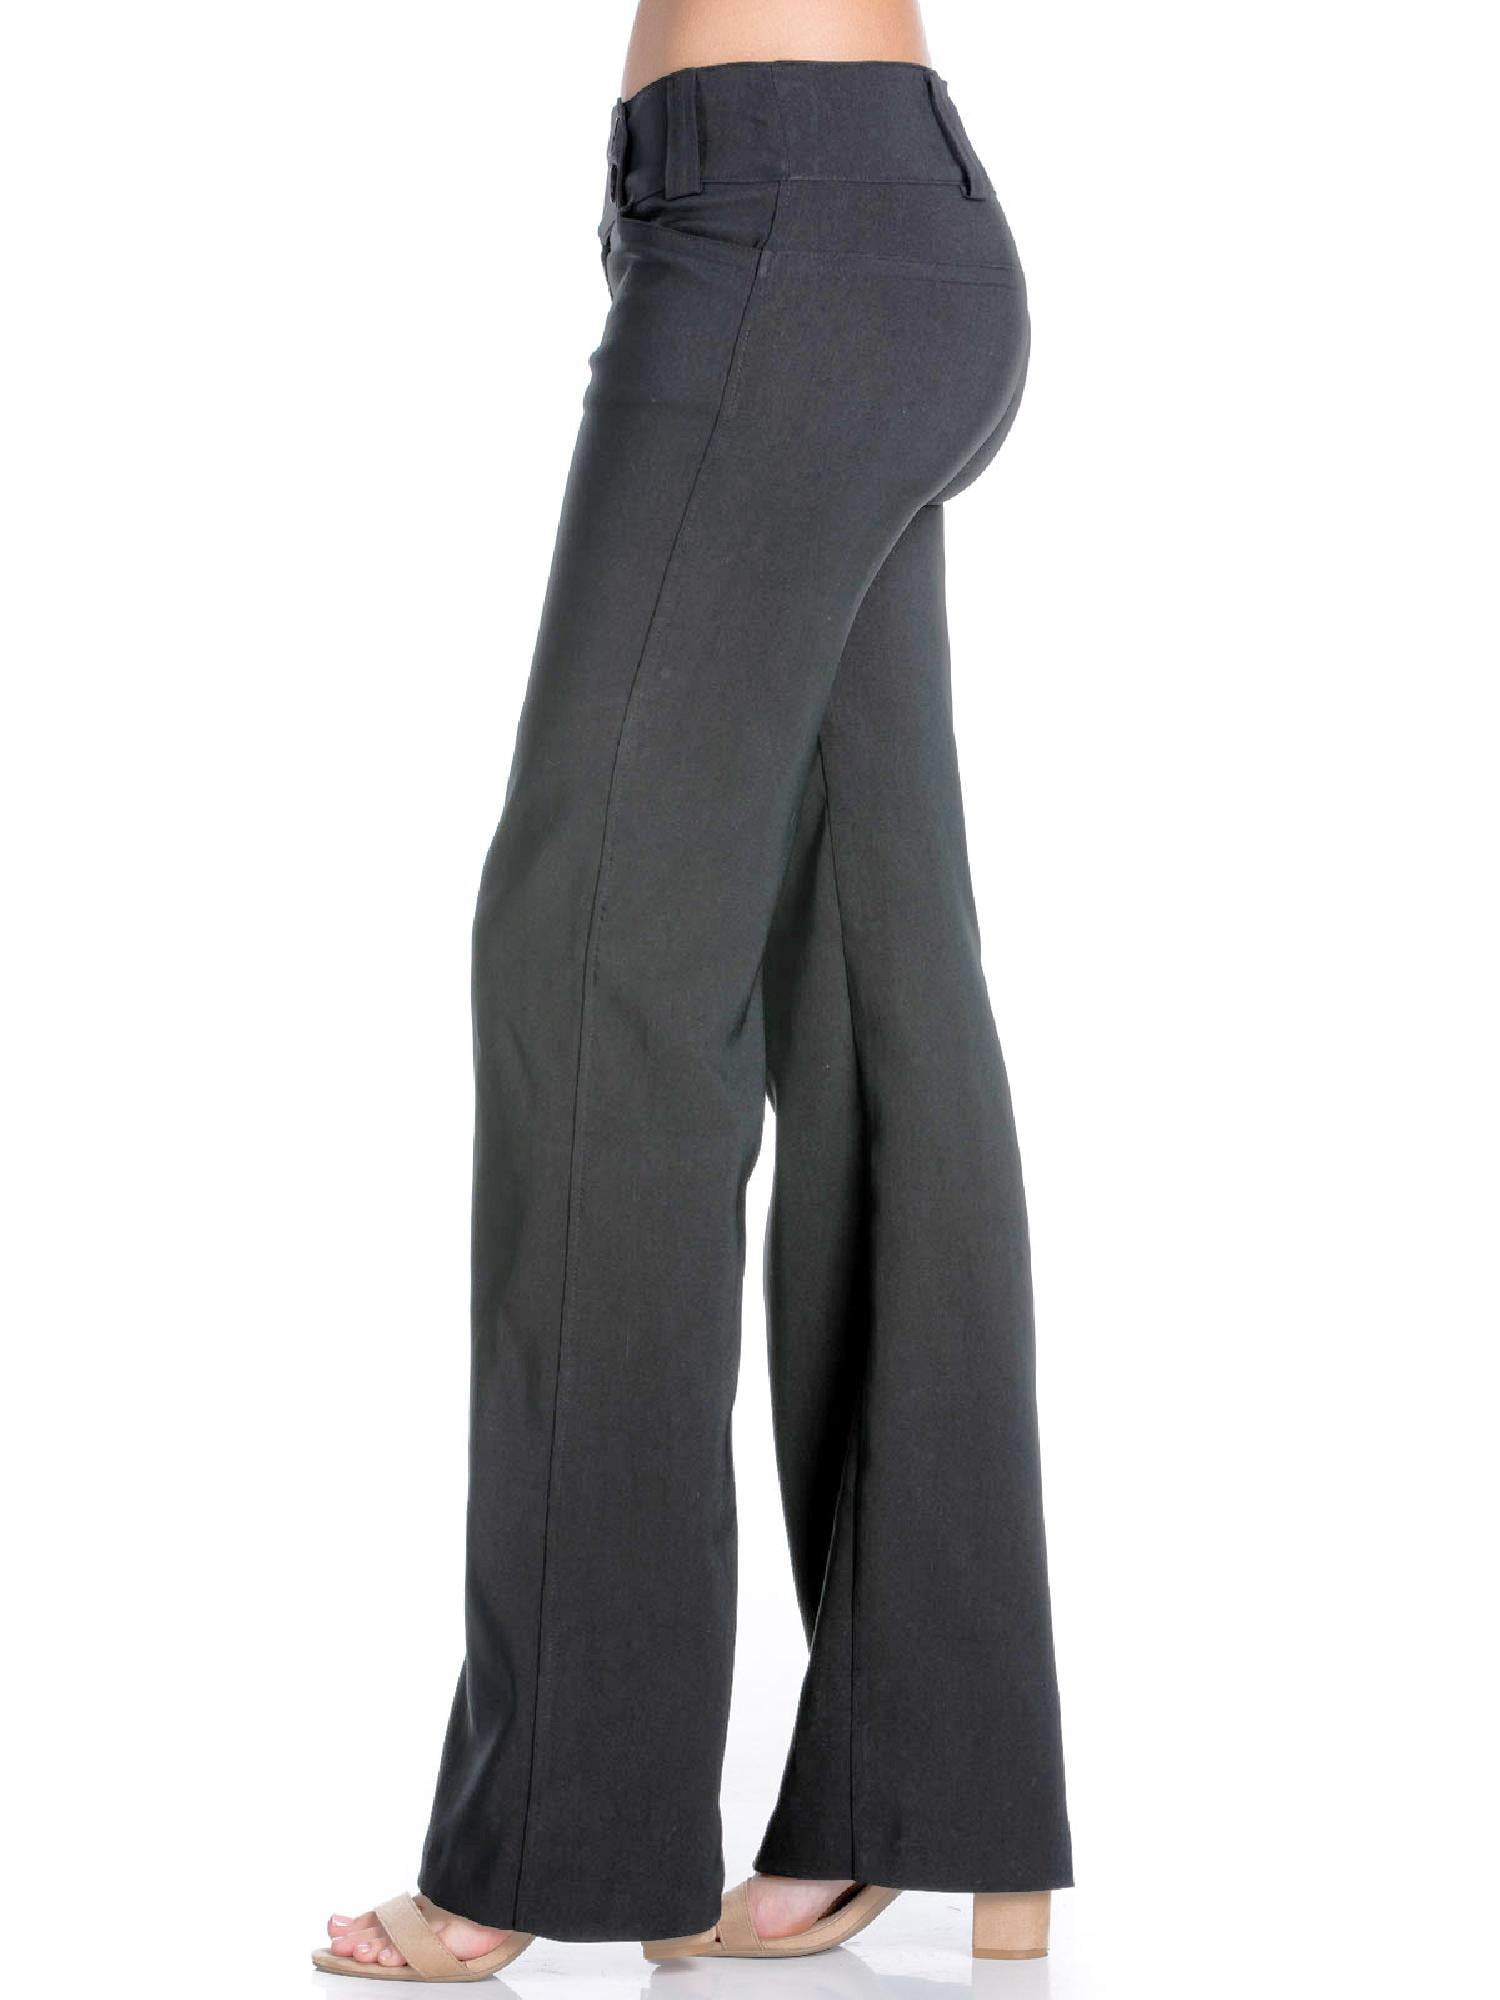 MixMatchy Women's High Waist Slim Boot-Cut Stretch Office Pants Trousers -  Walmart.com